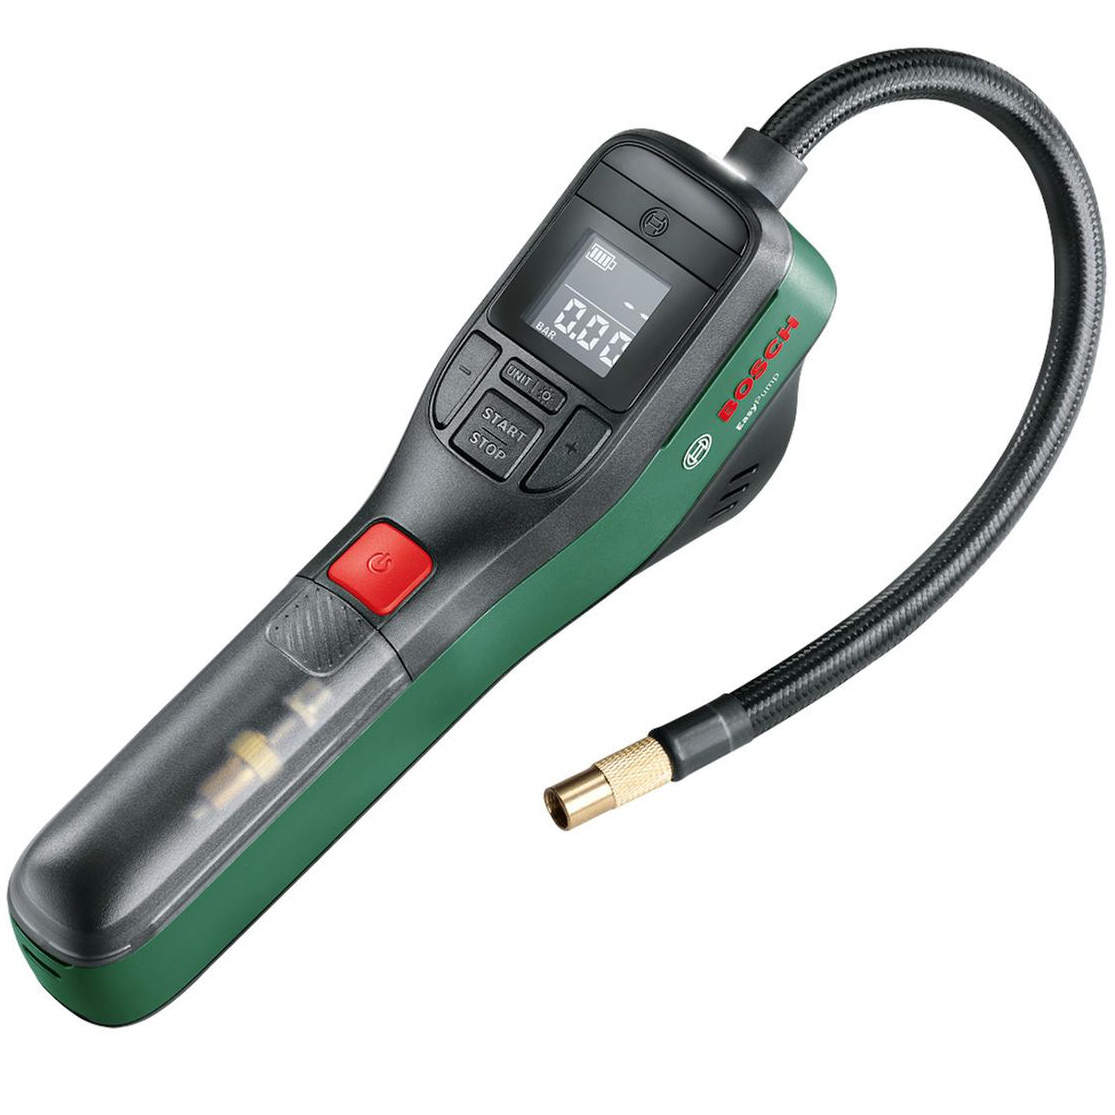 Productfoto van Bosch Easy Pump - Cordless Pneumatic Pump - black/green